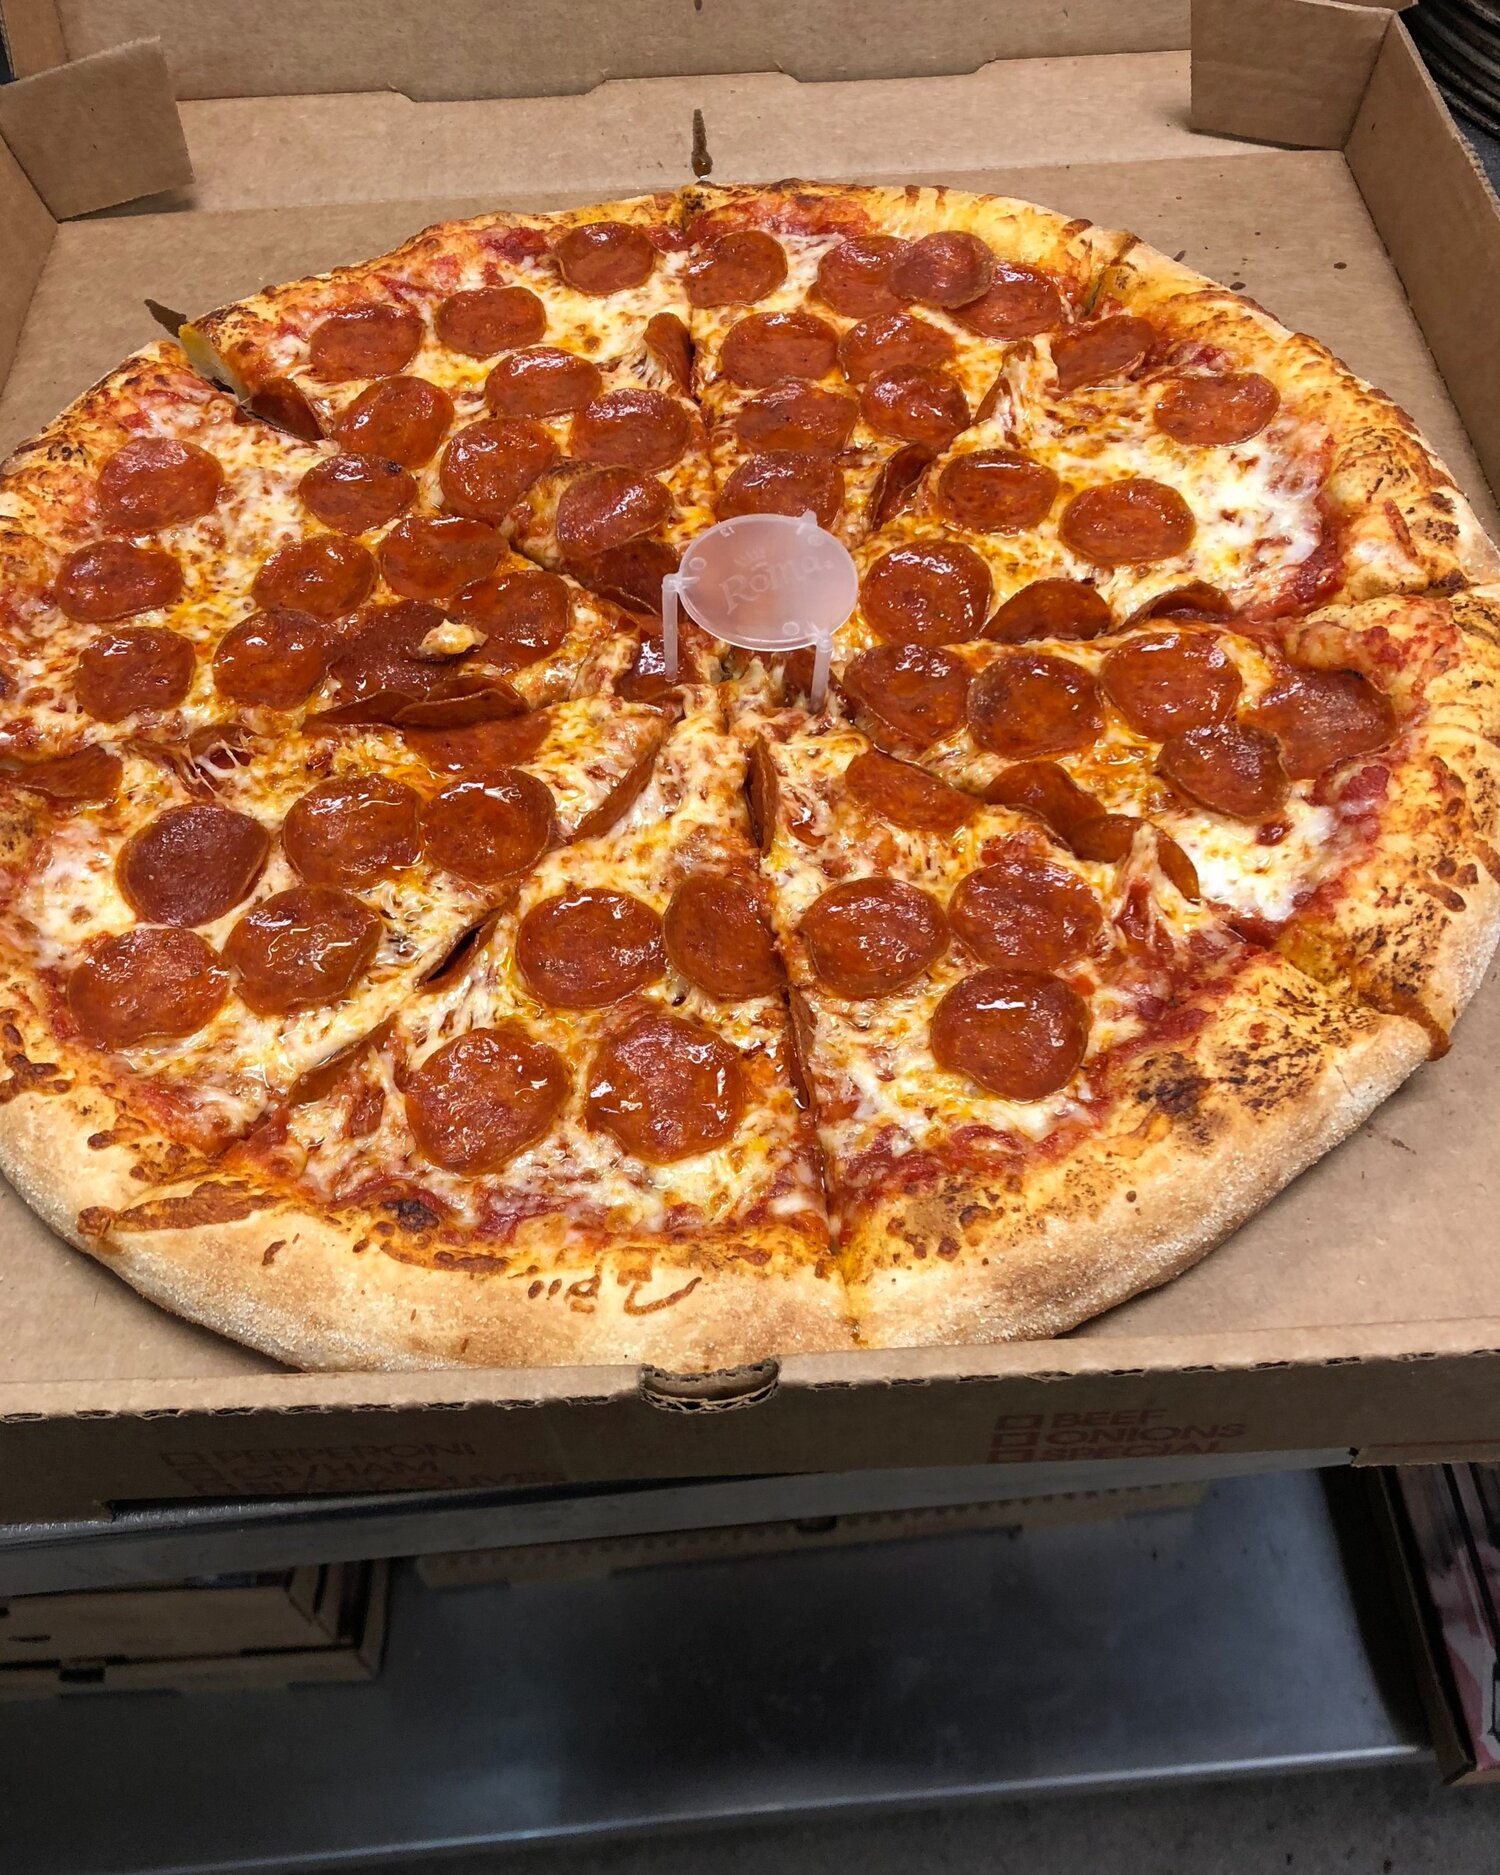 Medium Super Deluxe Pizza, Pizza Delivery & Pickup